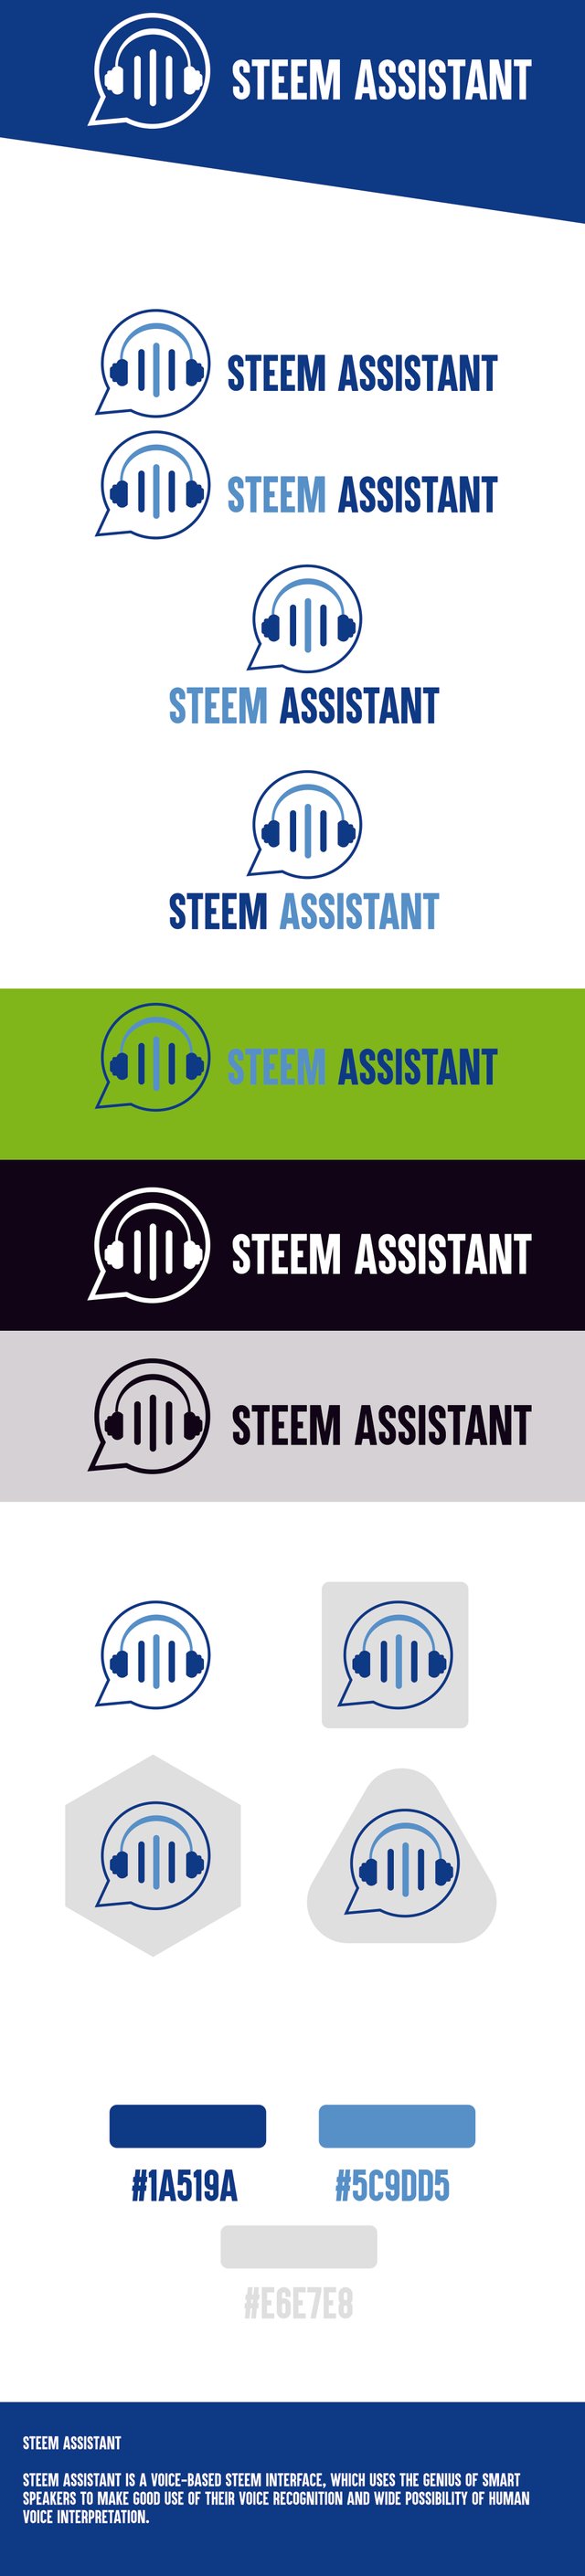 steem assistant2.jpg